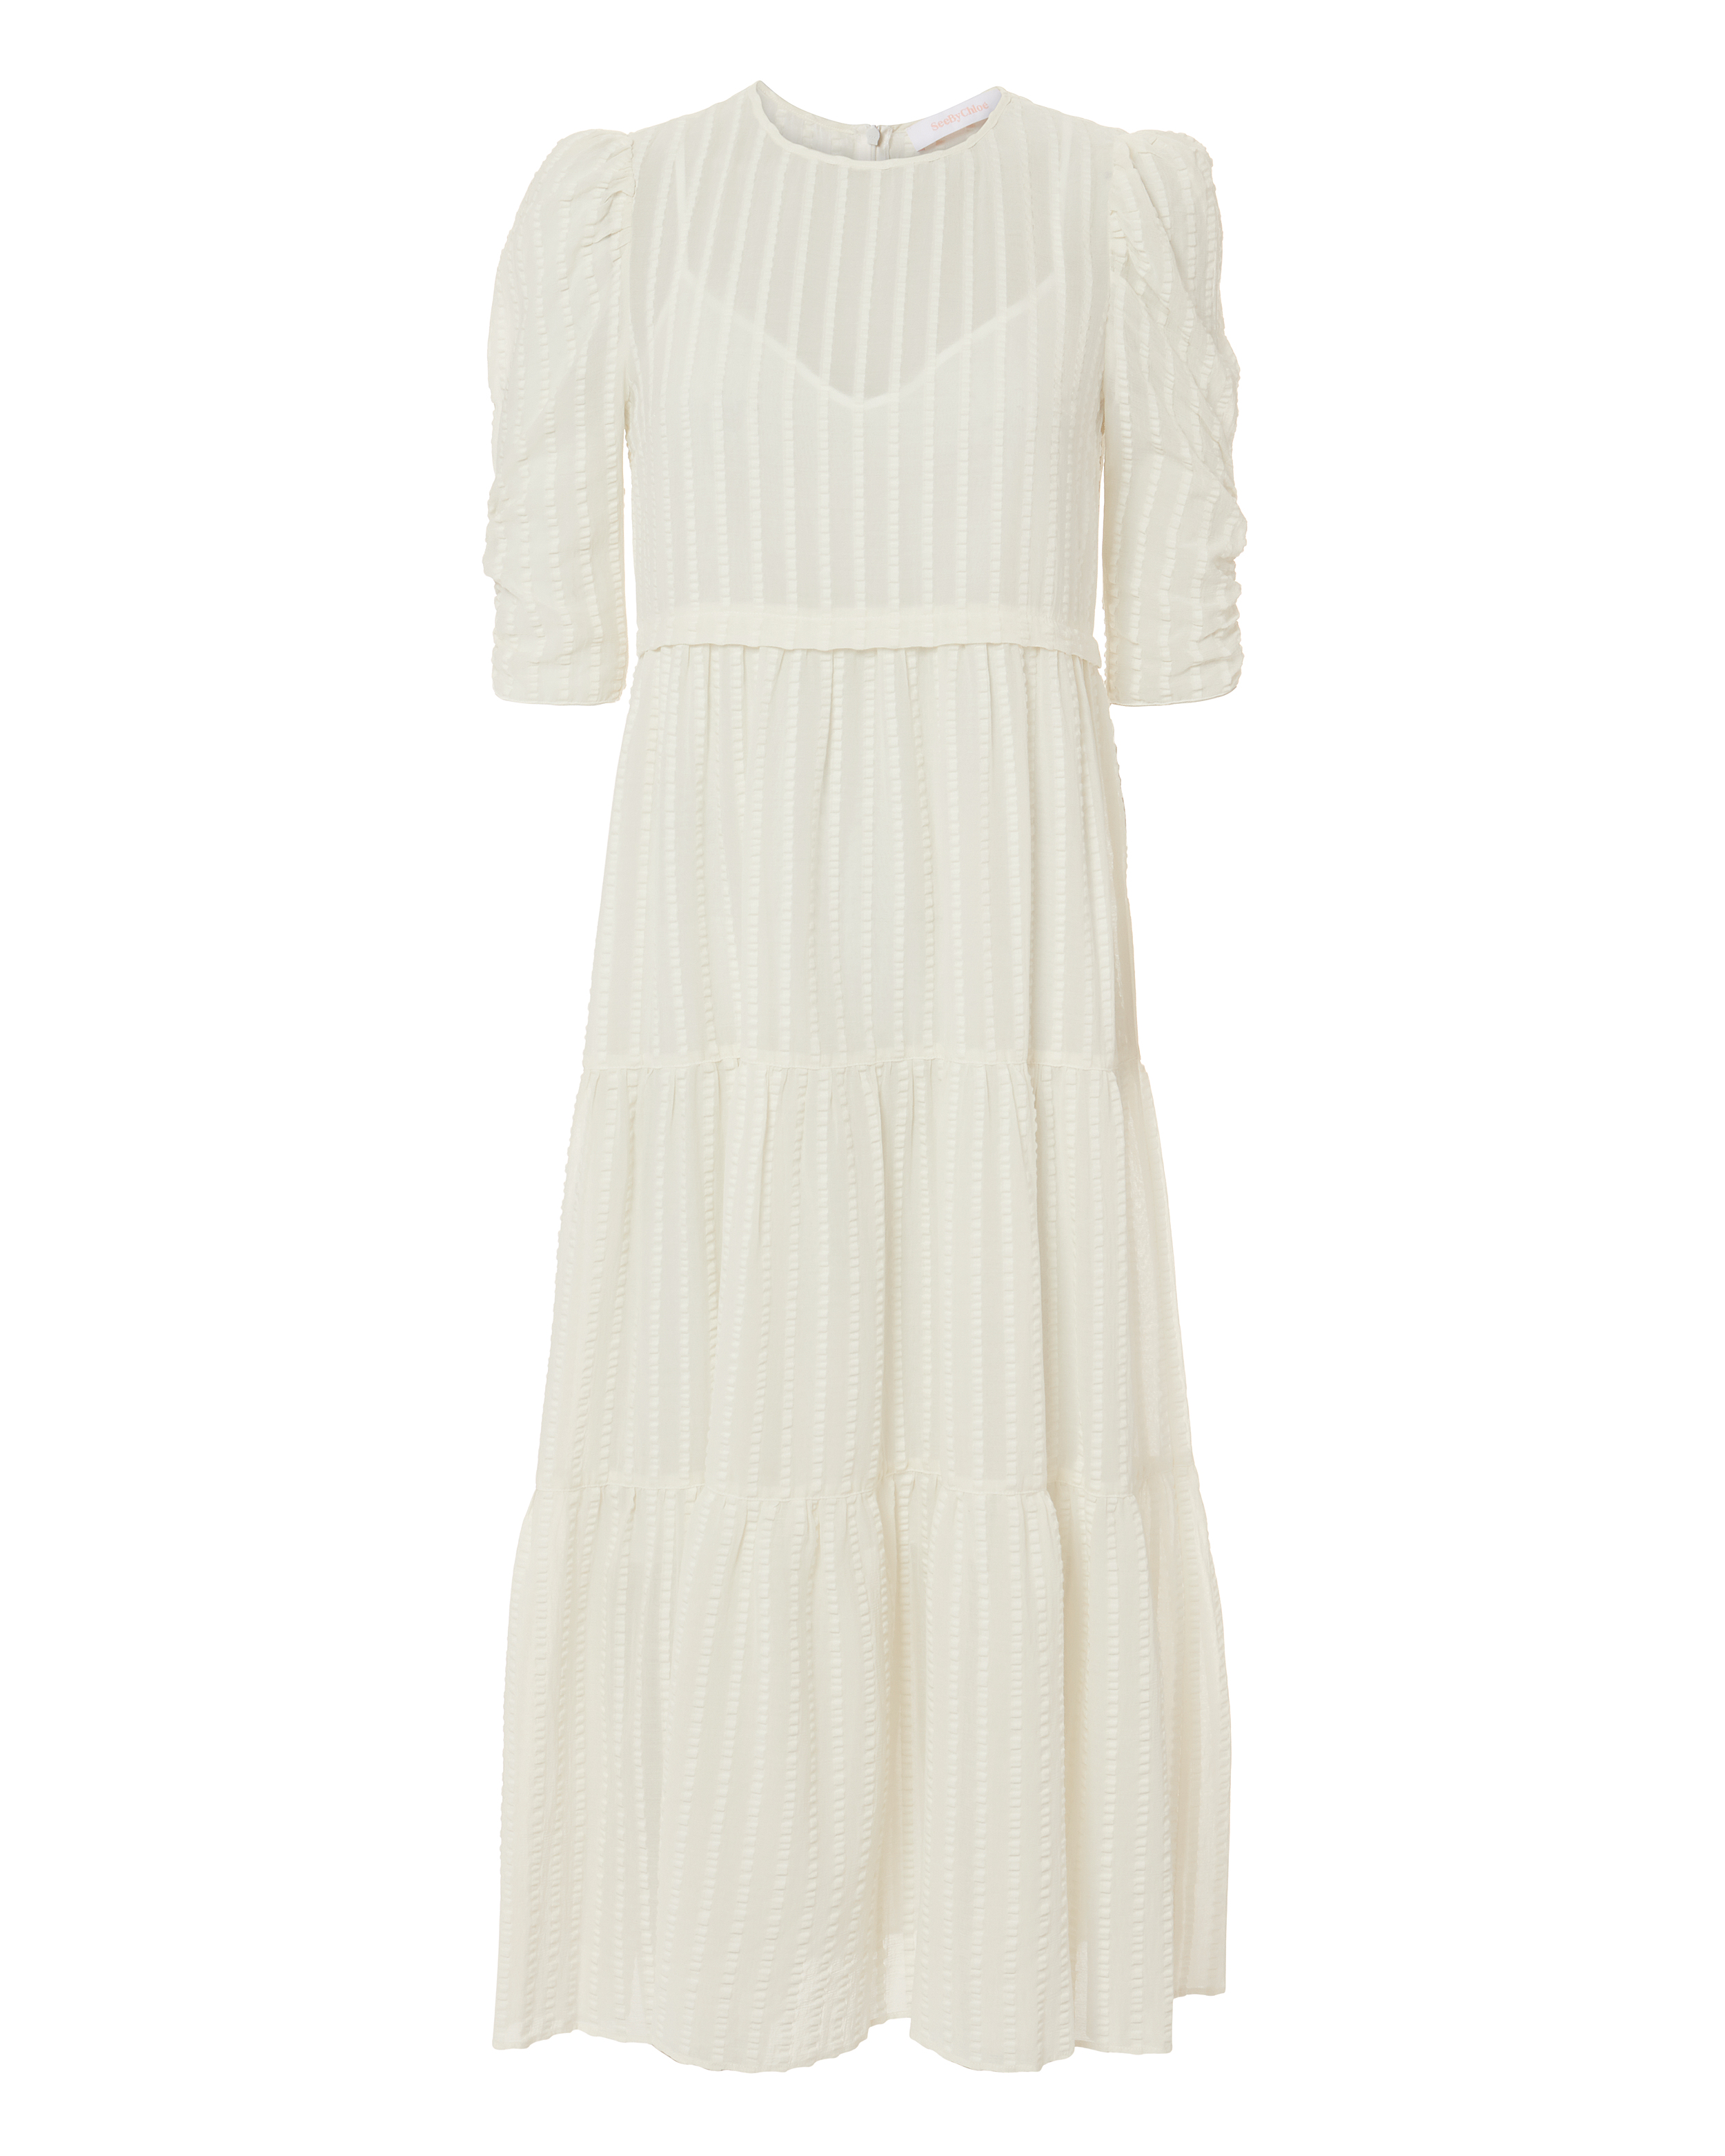 SEE BY CHLOÉ Tea Length White Dress,CHS18ARO01020